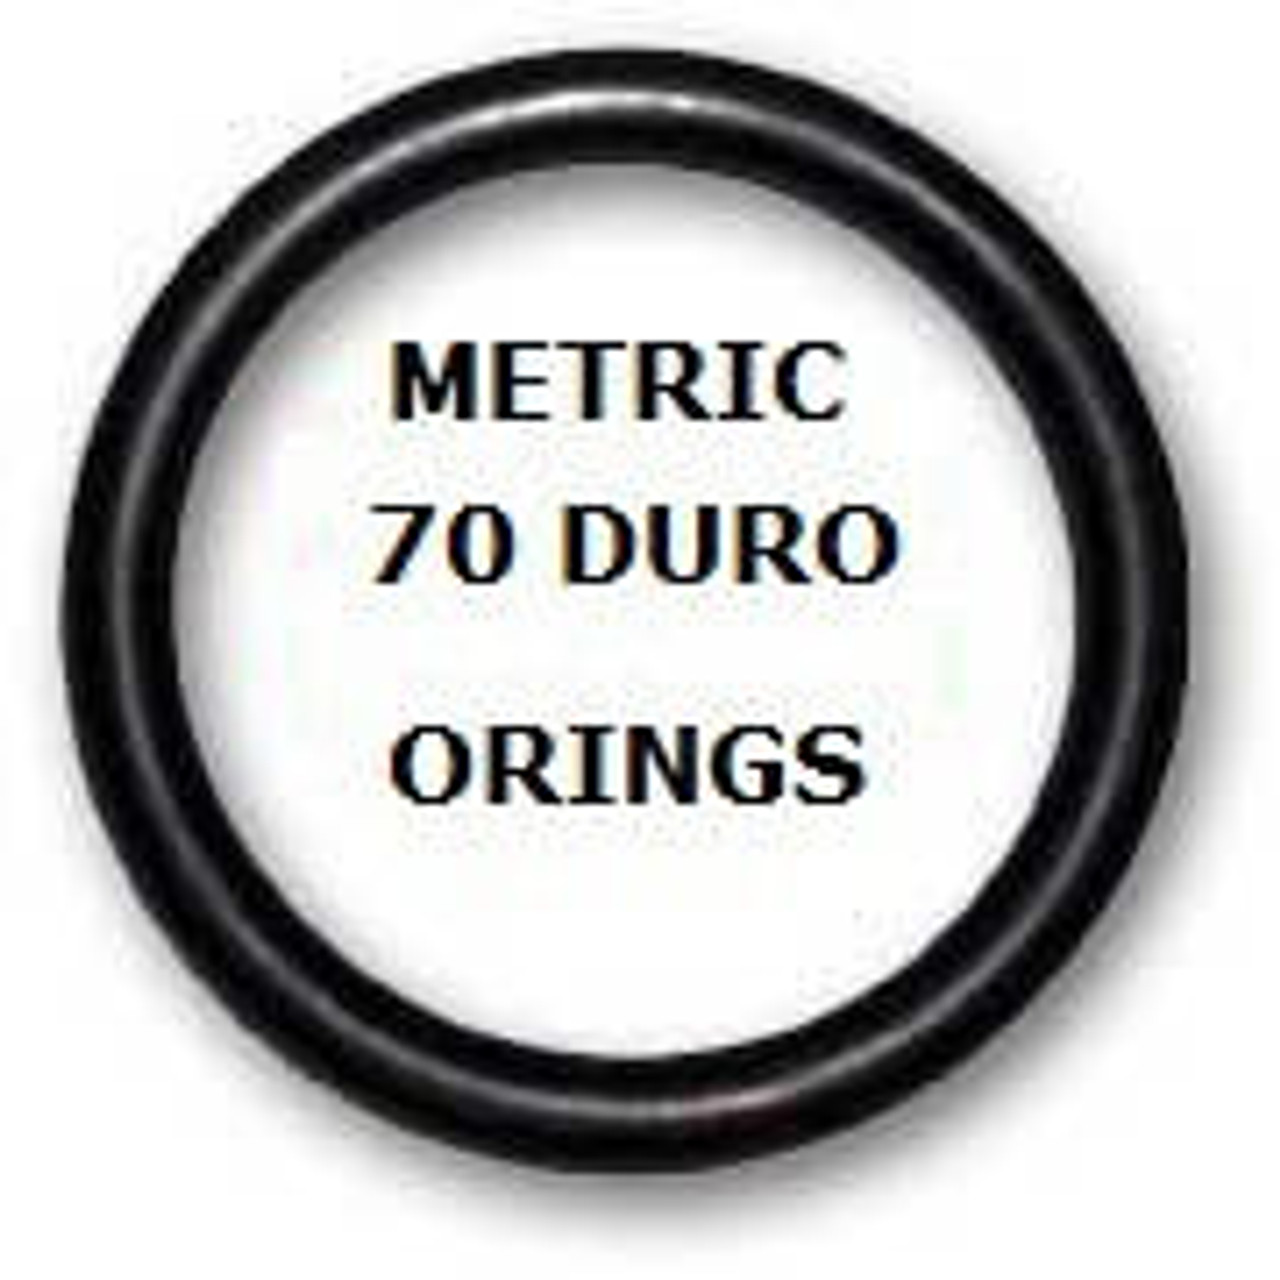 Metric Buna  O-rings 354.5 x 8.4mm JIS P355 Price for 1 pc